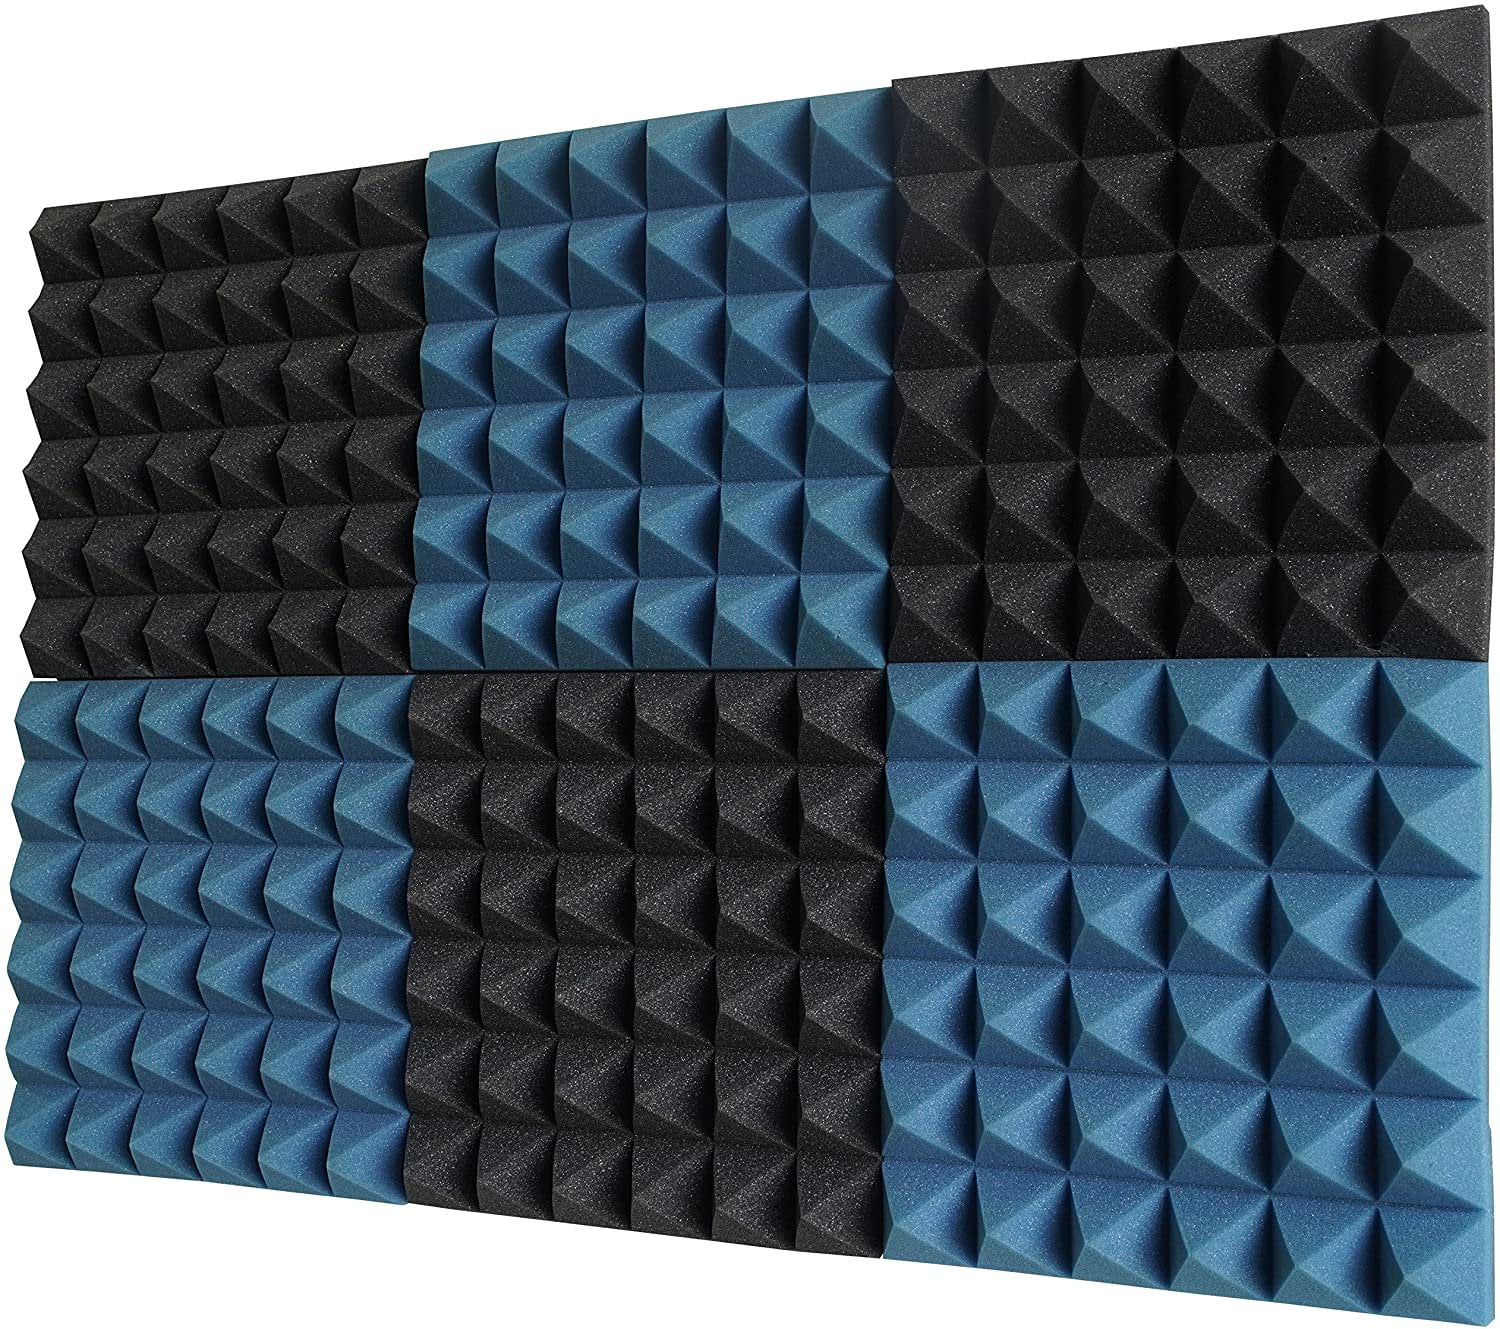 Foamily 24 Pack All Ice Blue Acoustic Panels Studio Foam Wedges 1 X 12 X 12 